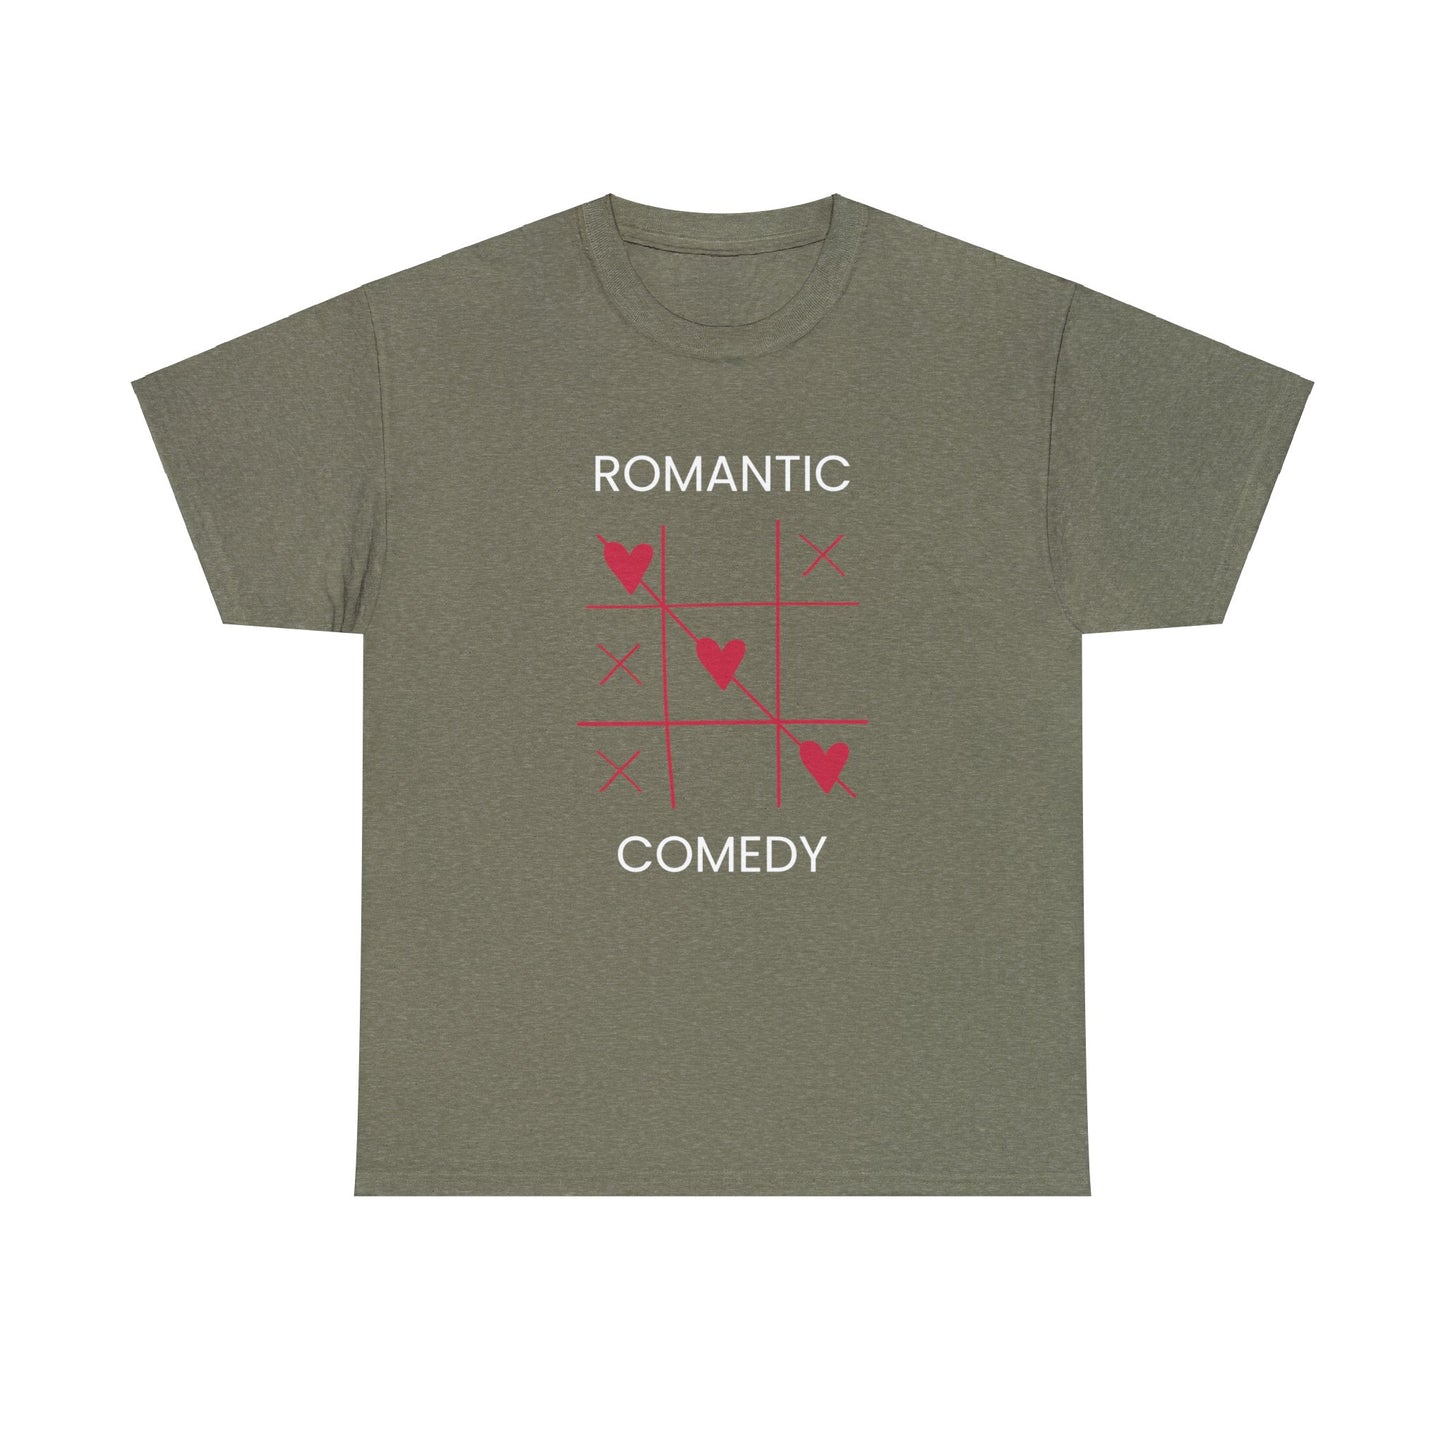 ROMANTIC COMEDY t-shirt